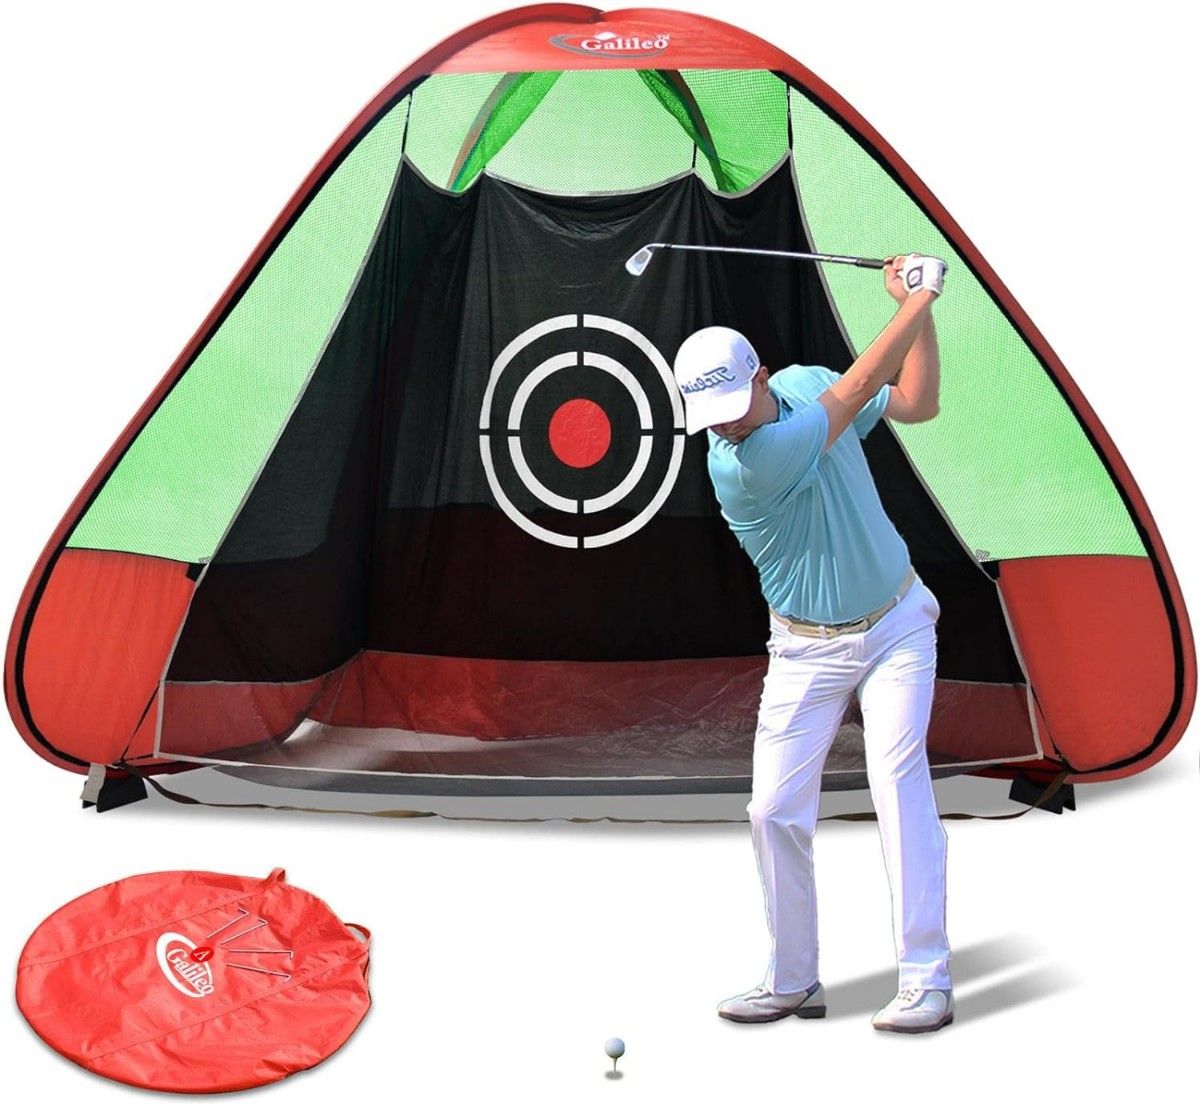 Gagalileo ゴルフネット 折りたたみ式 3x2.1x1.8m 設置簡単 収納バッグ付き ポップアップ ゴルフ練習用